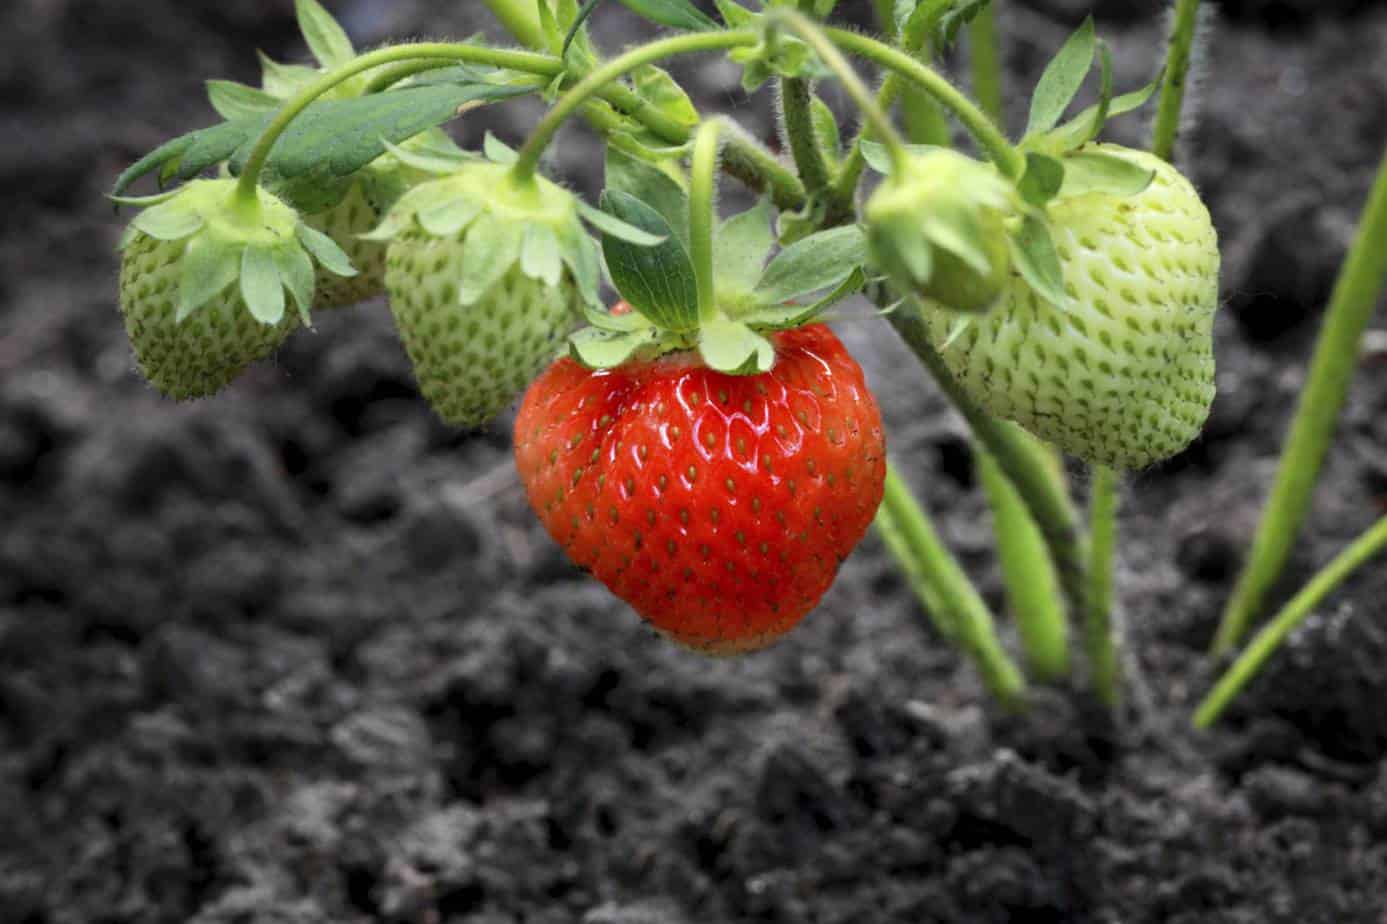 Strawberry fertilizer